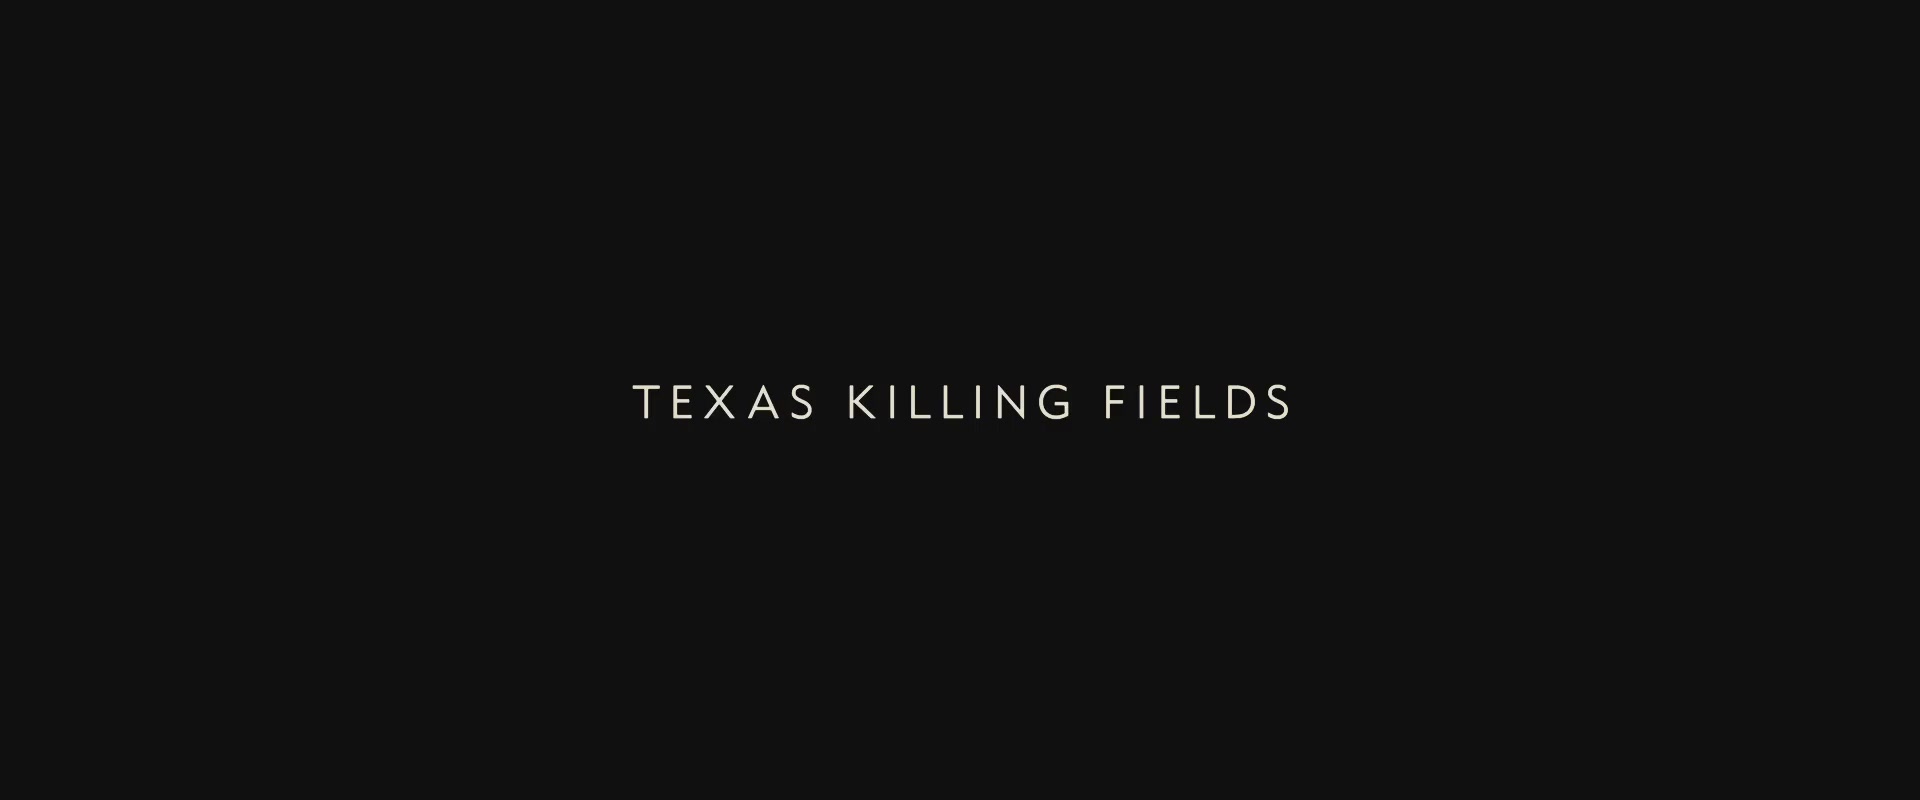 texas-killing-fields_001.jpg